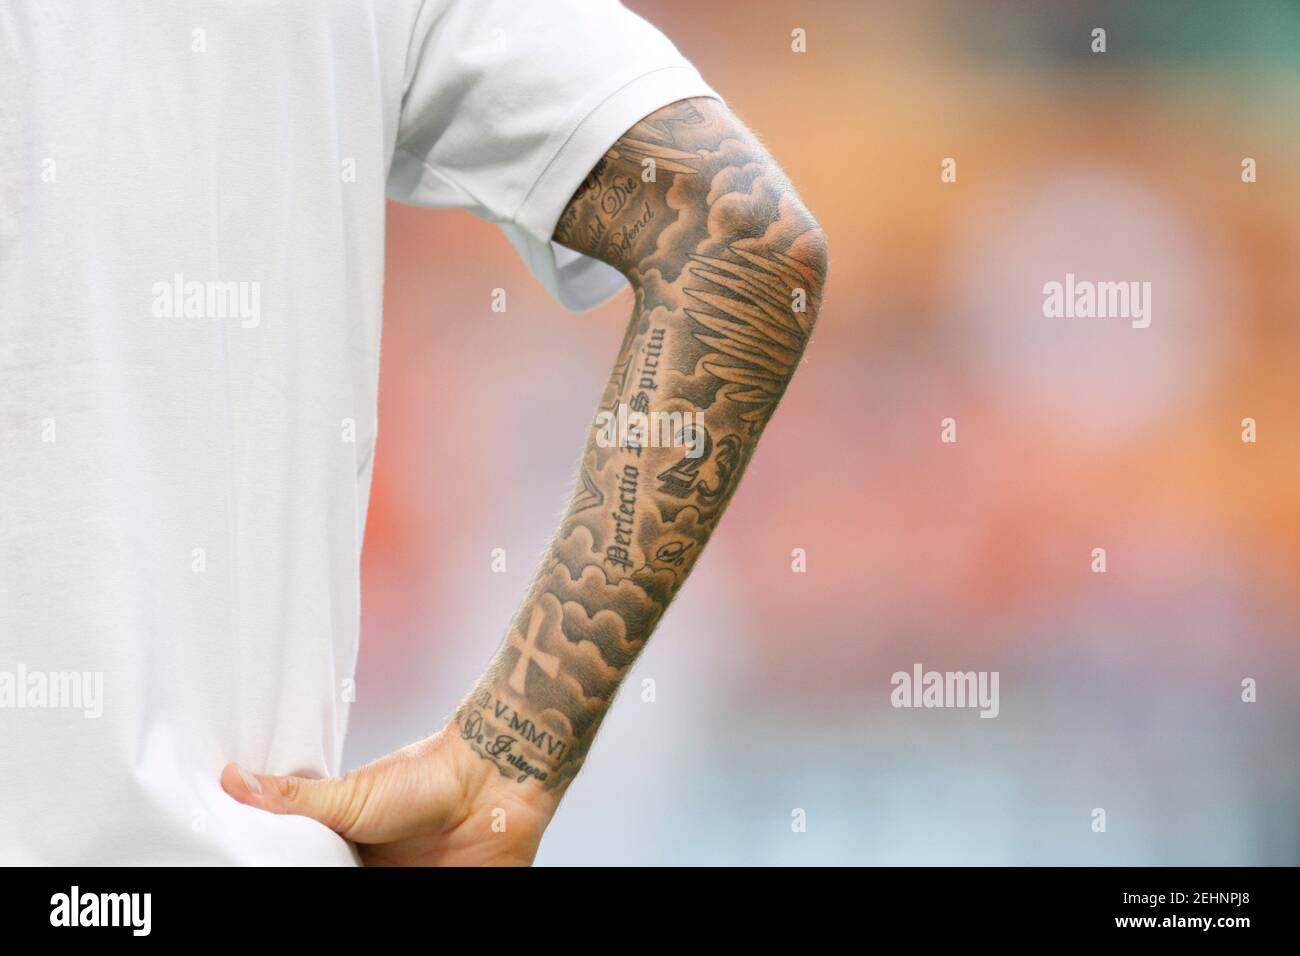 David beckham tattoo hi-res stock photography and images - Alamy